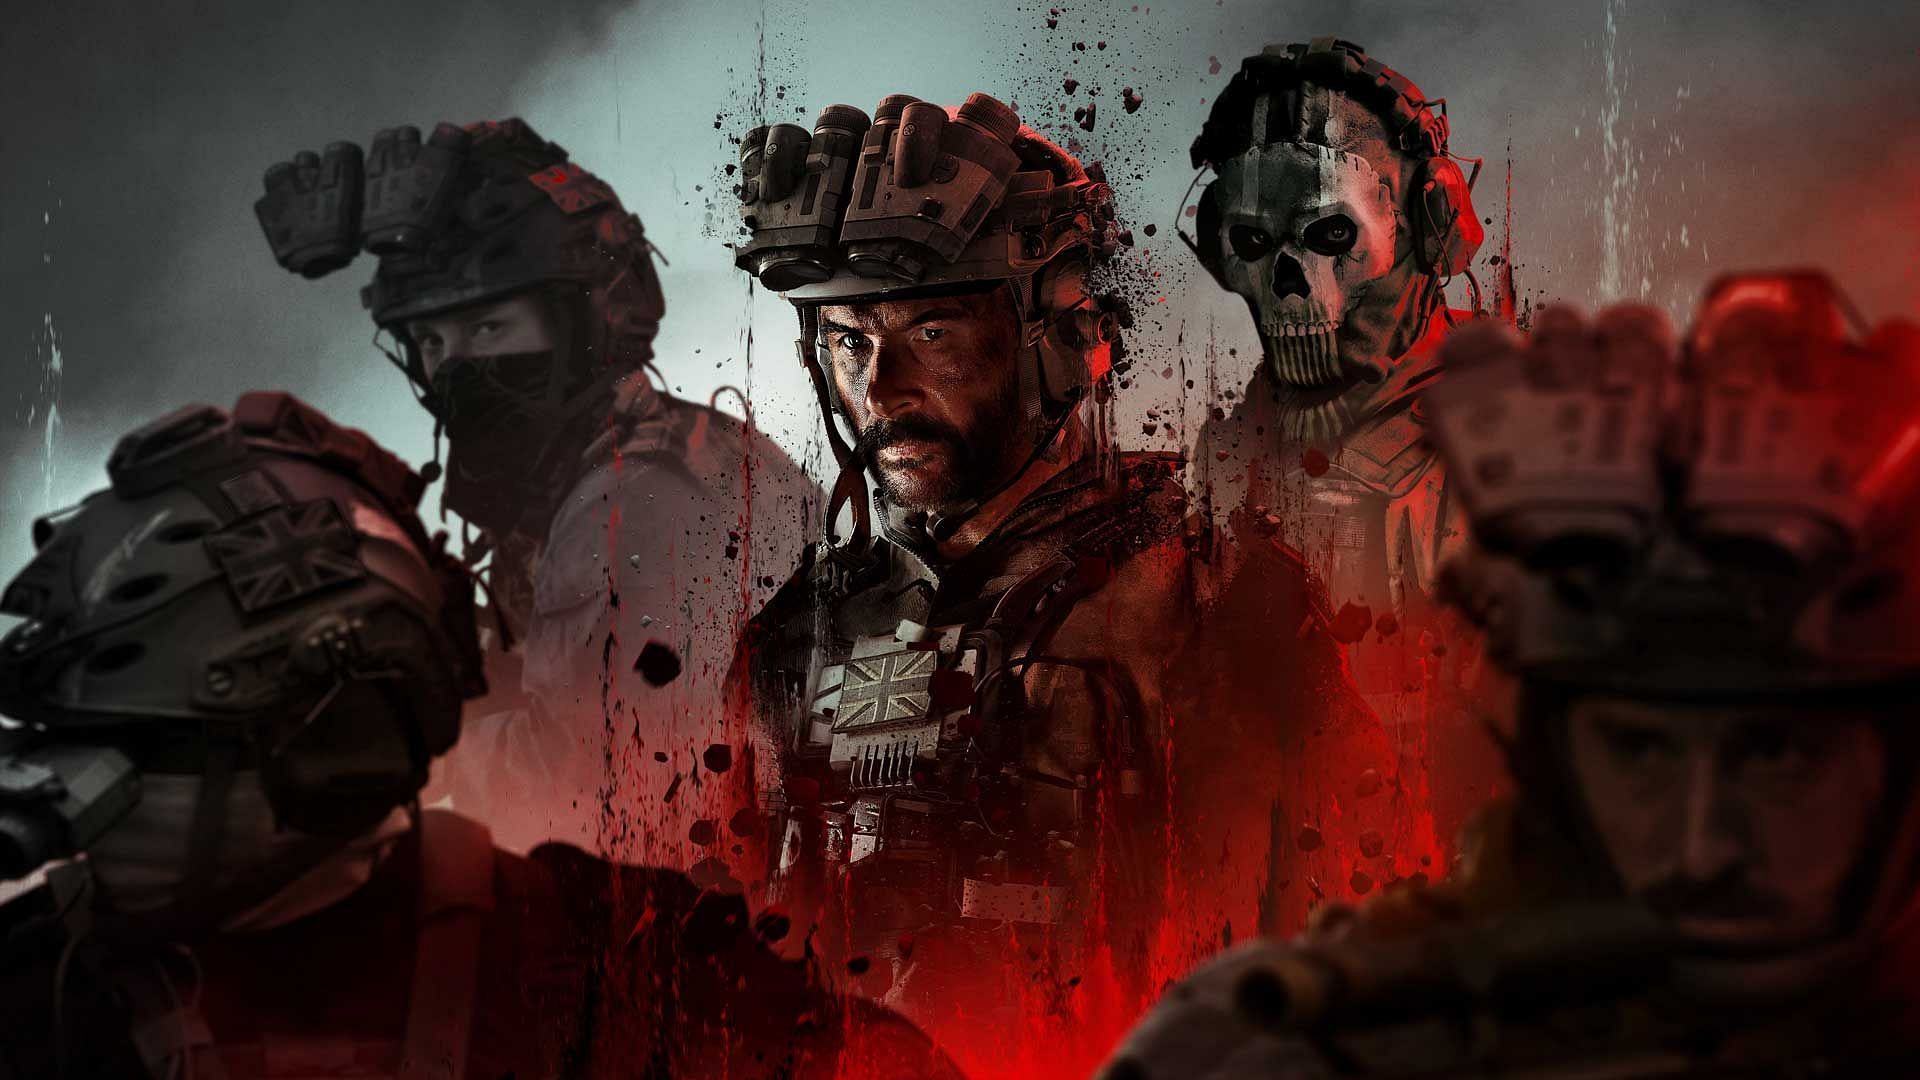 Modern Warfare 3 PC Gameplay and Impressions 